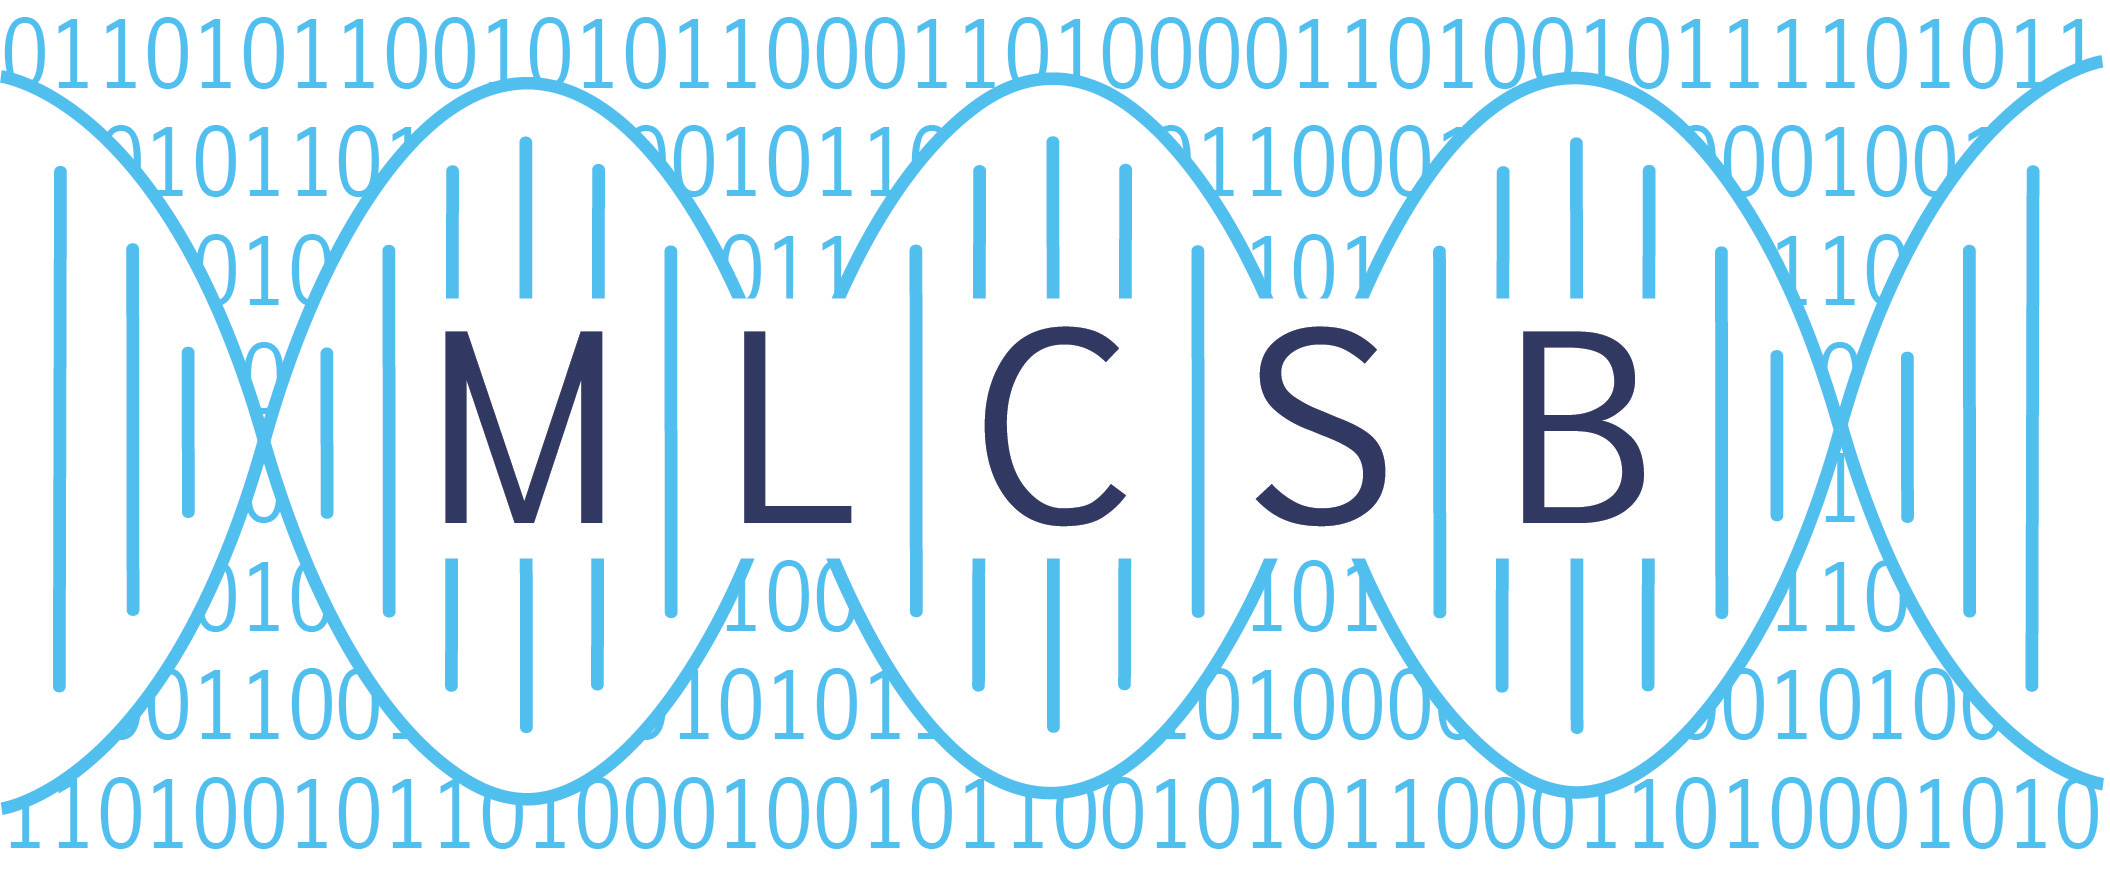 MLCSB logo